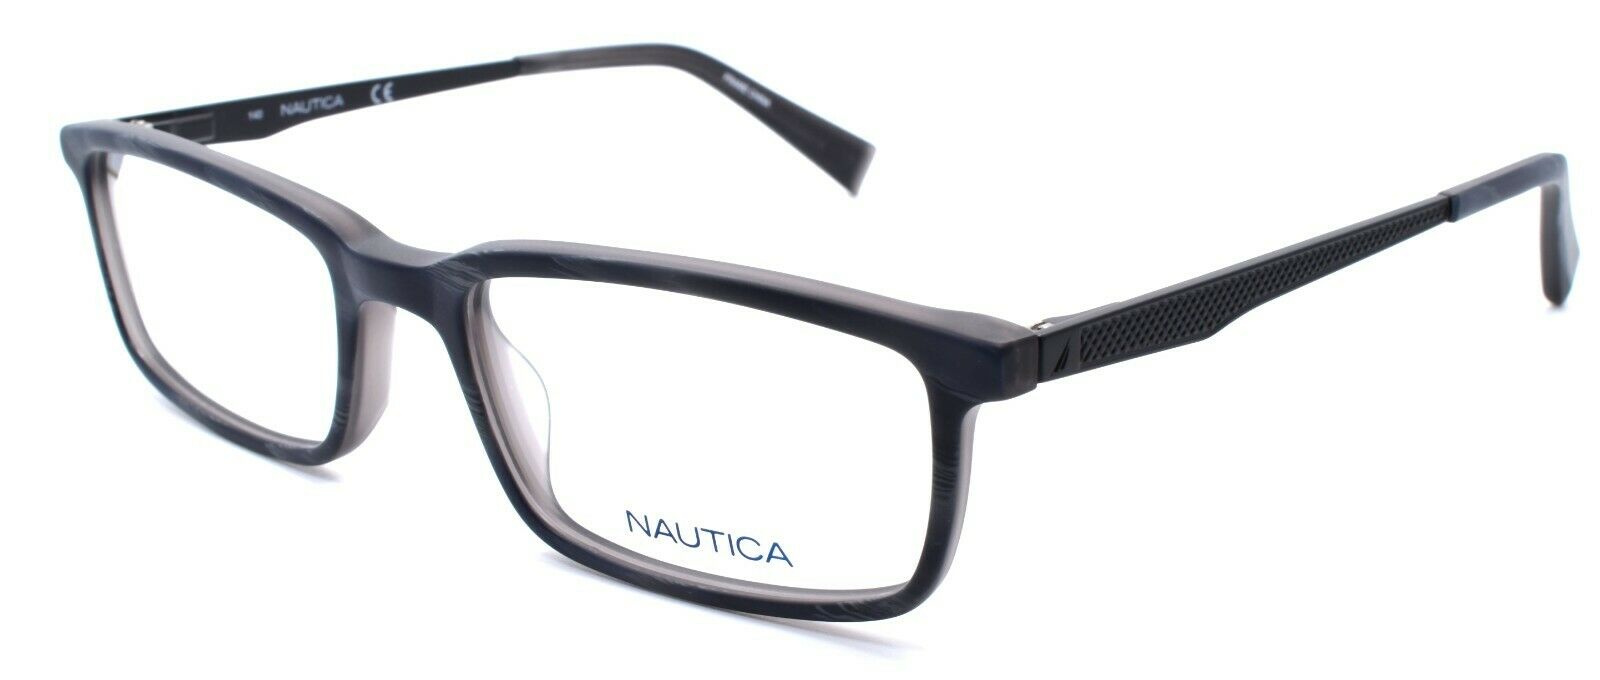 1-Nautica N8119 031 Men's Eyeglasses Frames 53-18-140 Matte Smoke Horn-688940452778-IKSpecs